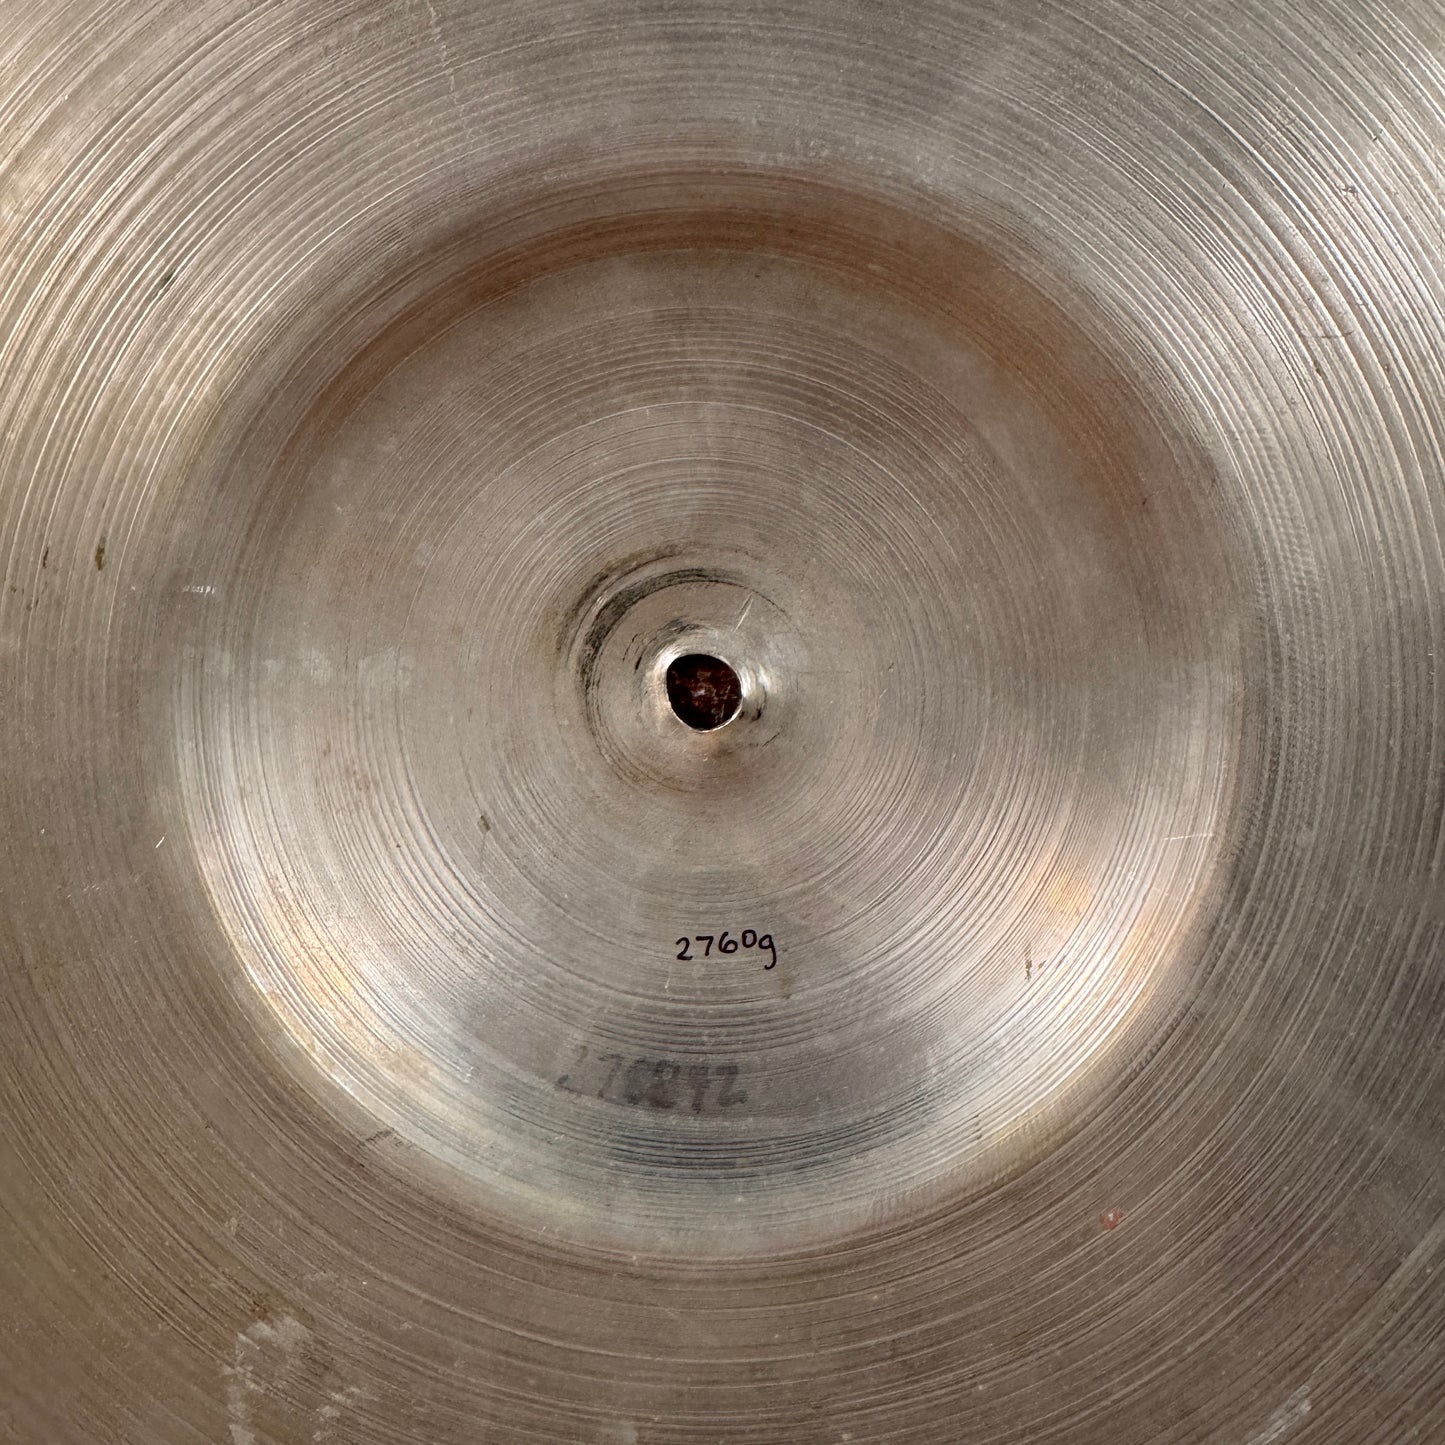 24" Roxy 1960s Jazz Ride Cymbal w/ Rivets 2760g Made in Germany 60cm *Video Demo*